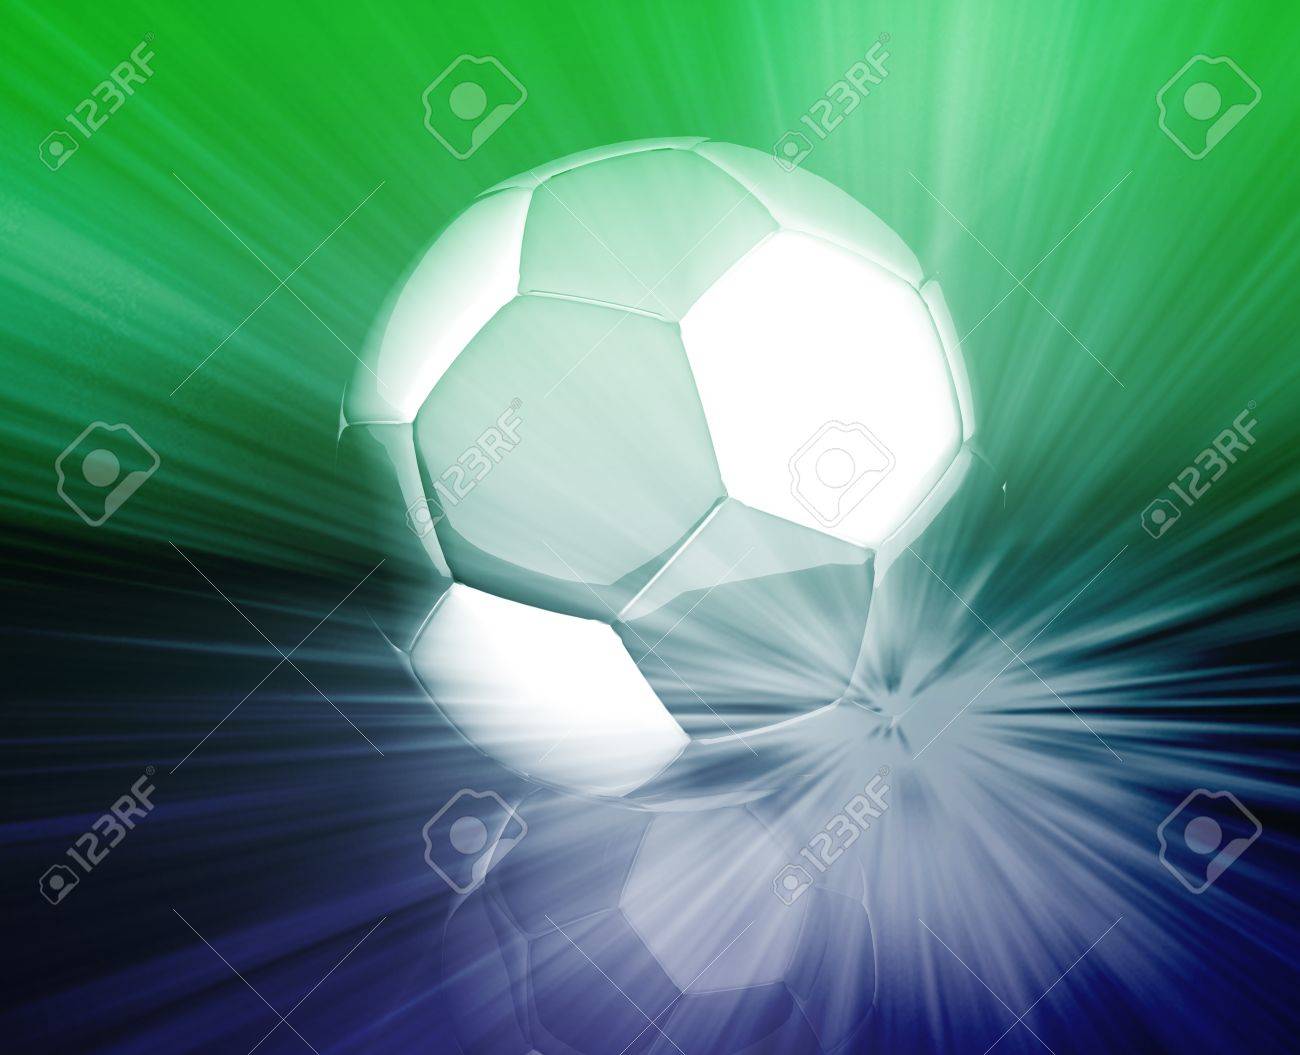 Shining Modern Soccer Ball Abstract Wallpaper Background Stock